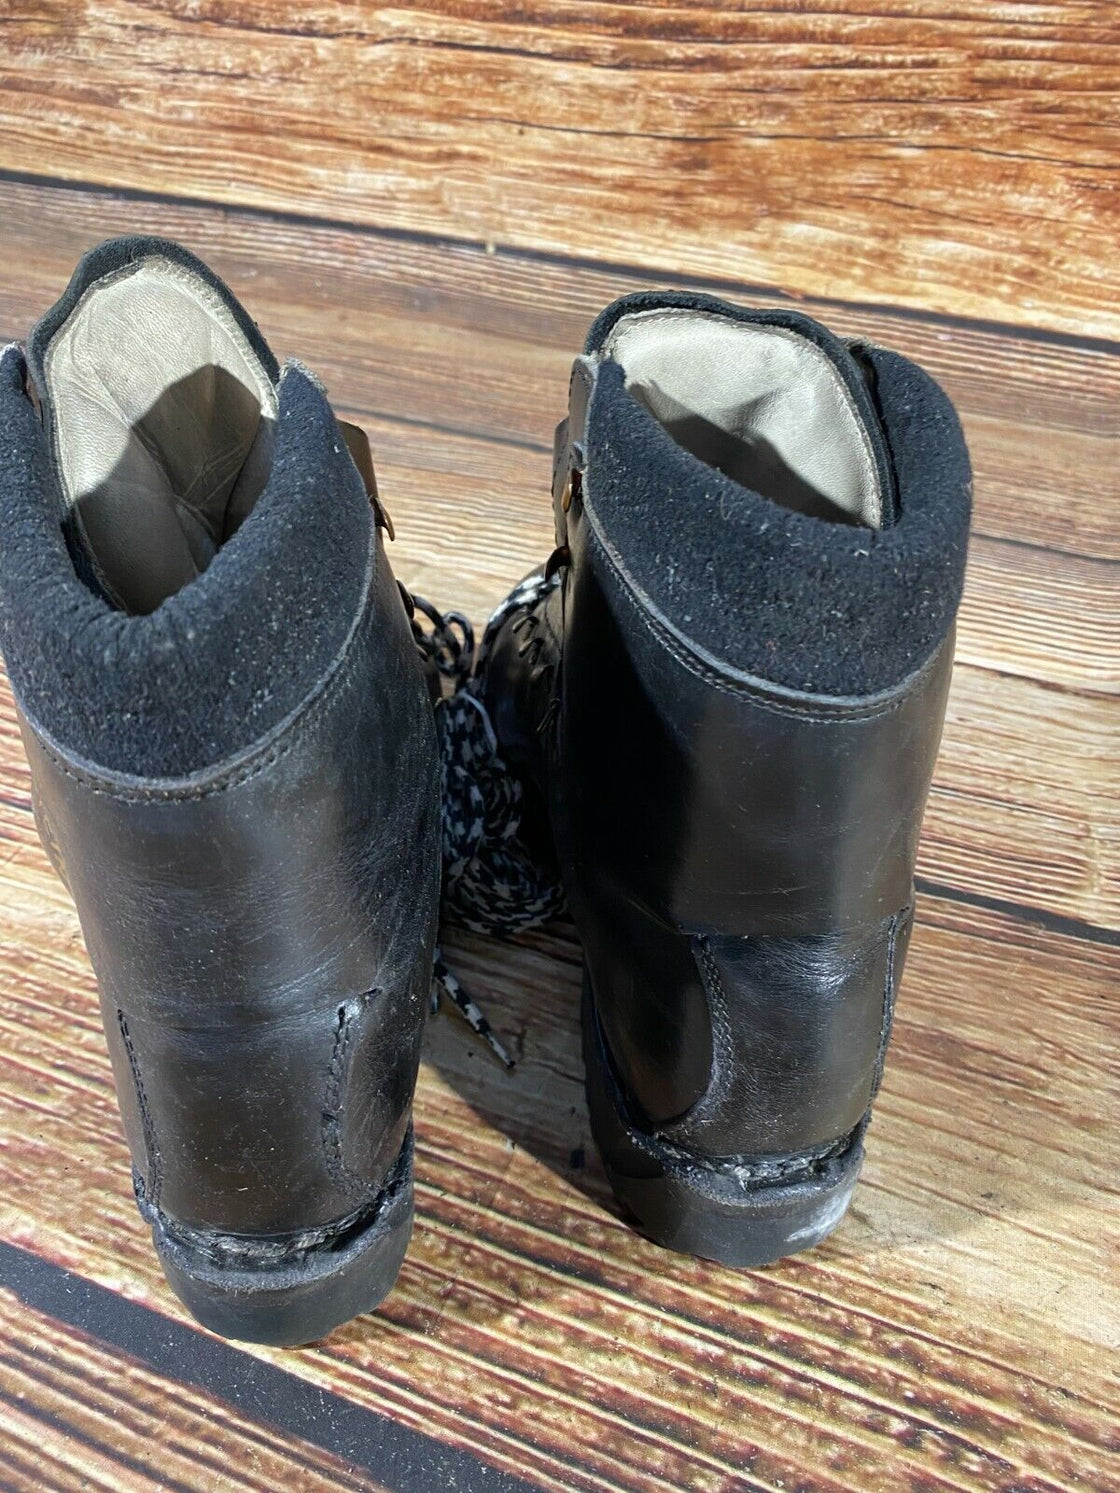 DACHSTEIN Leather Vintage Alpine Ski Boots EU42 US8.5 Mondo 270 Cable Bindings